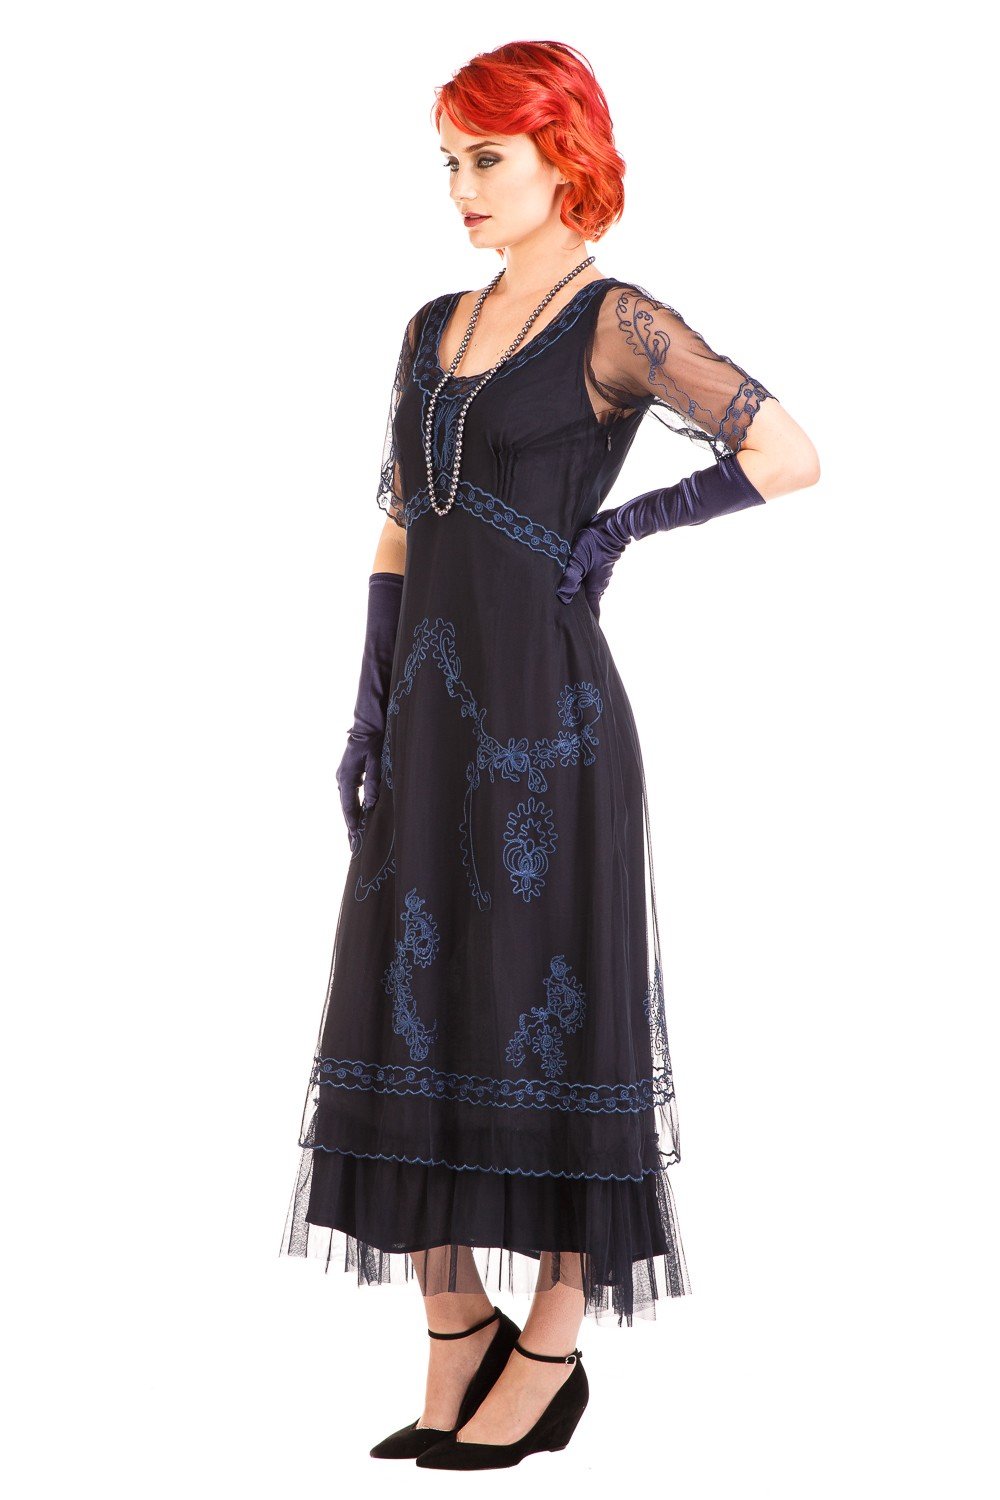 Rachel Vintage Style Party Dress in Sapphire by Nataya - SALE